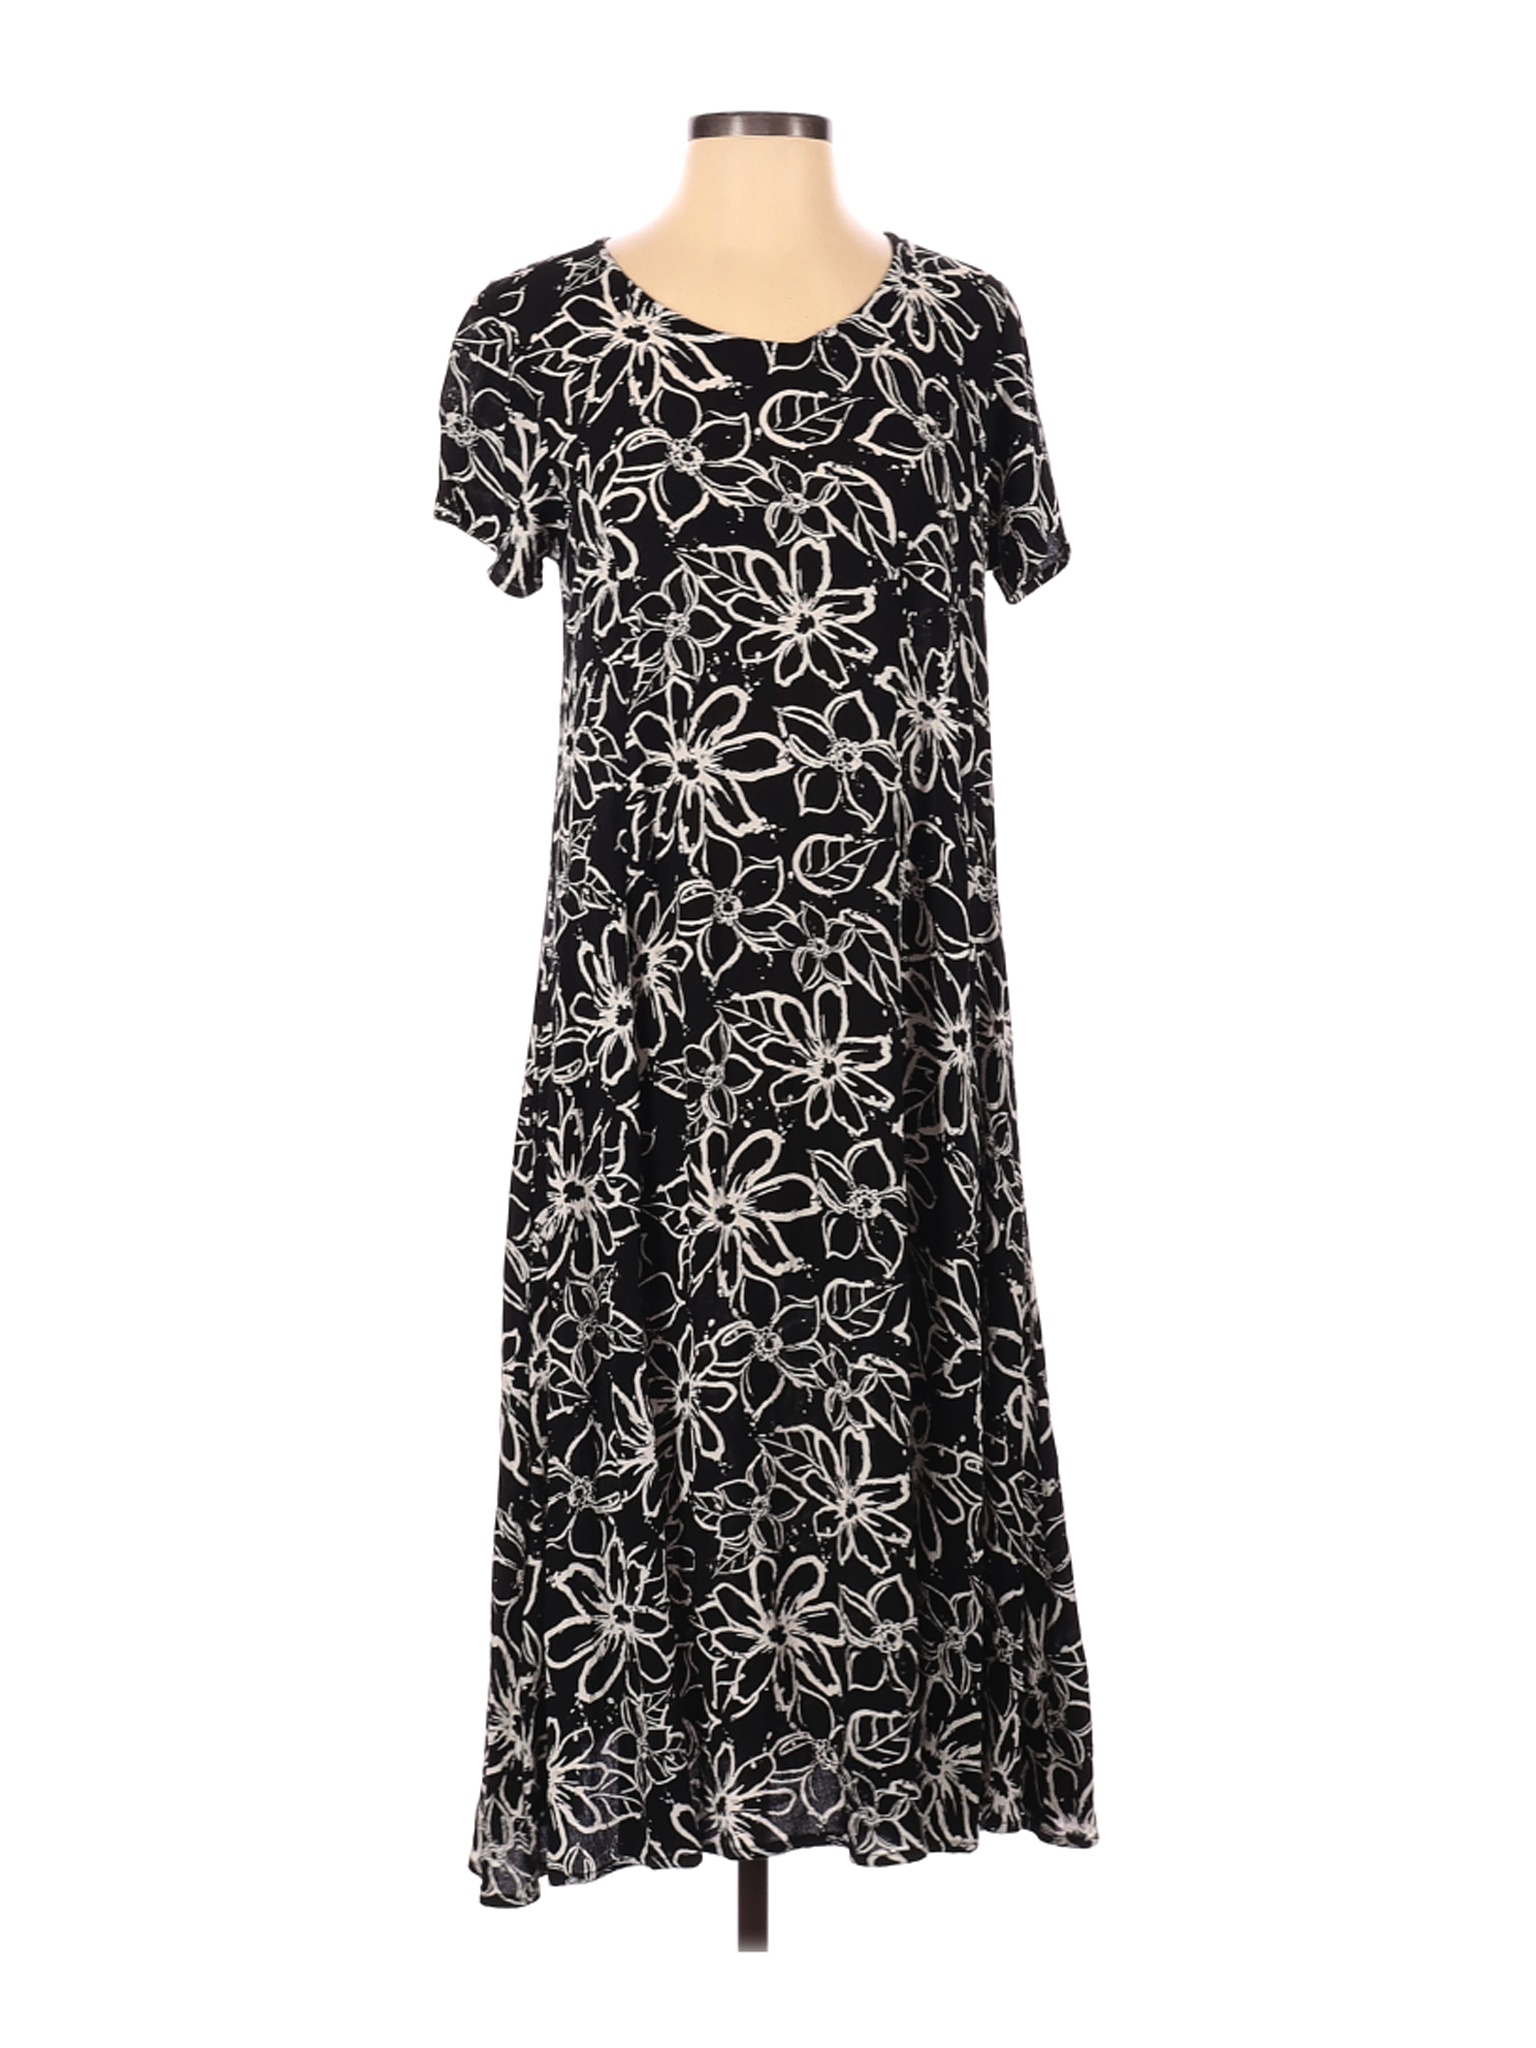 Blair Women Black Casual Dress S Petites | eBay